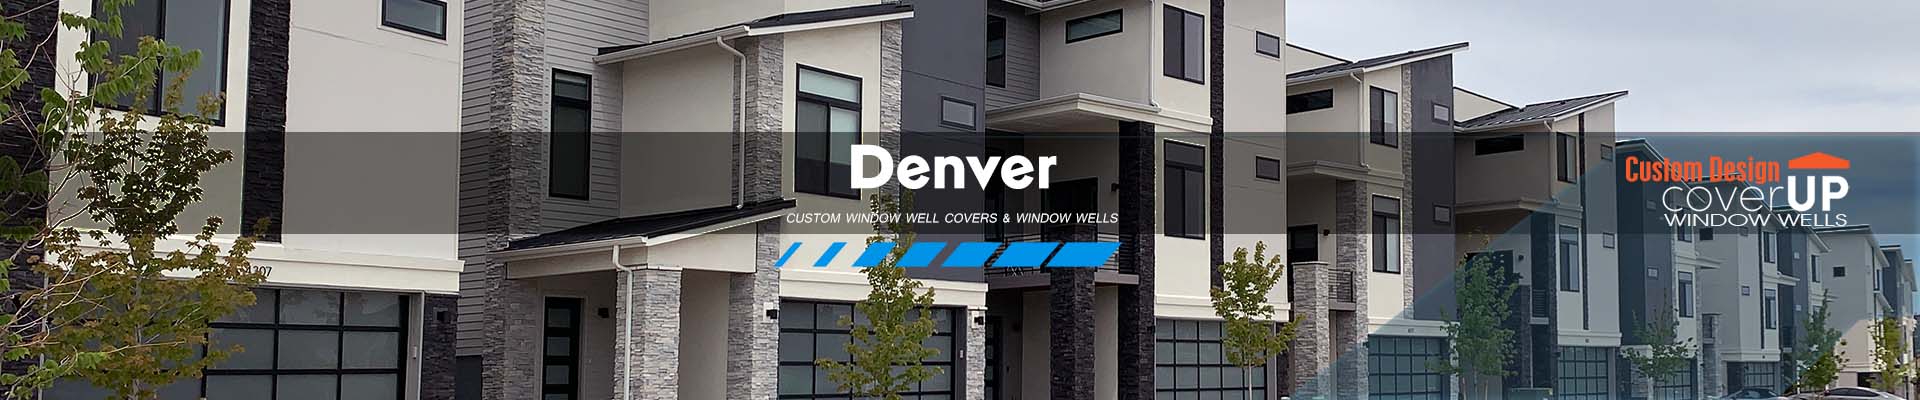 Denver Basement Window Well Covers Companies